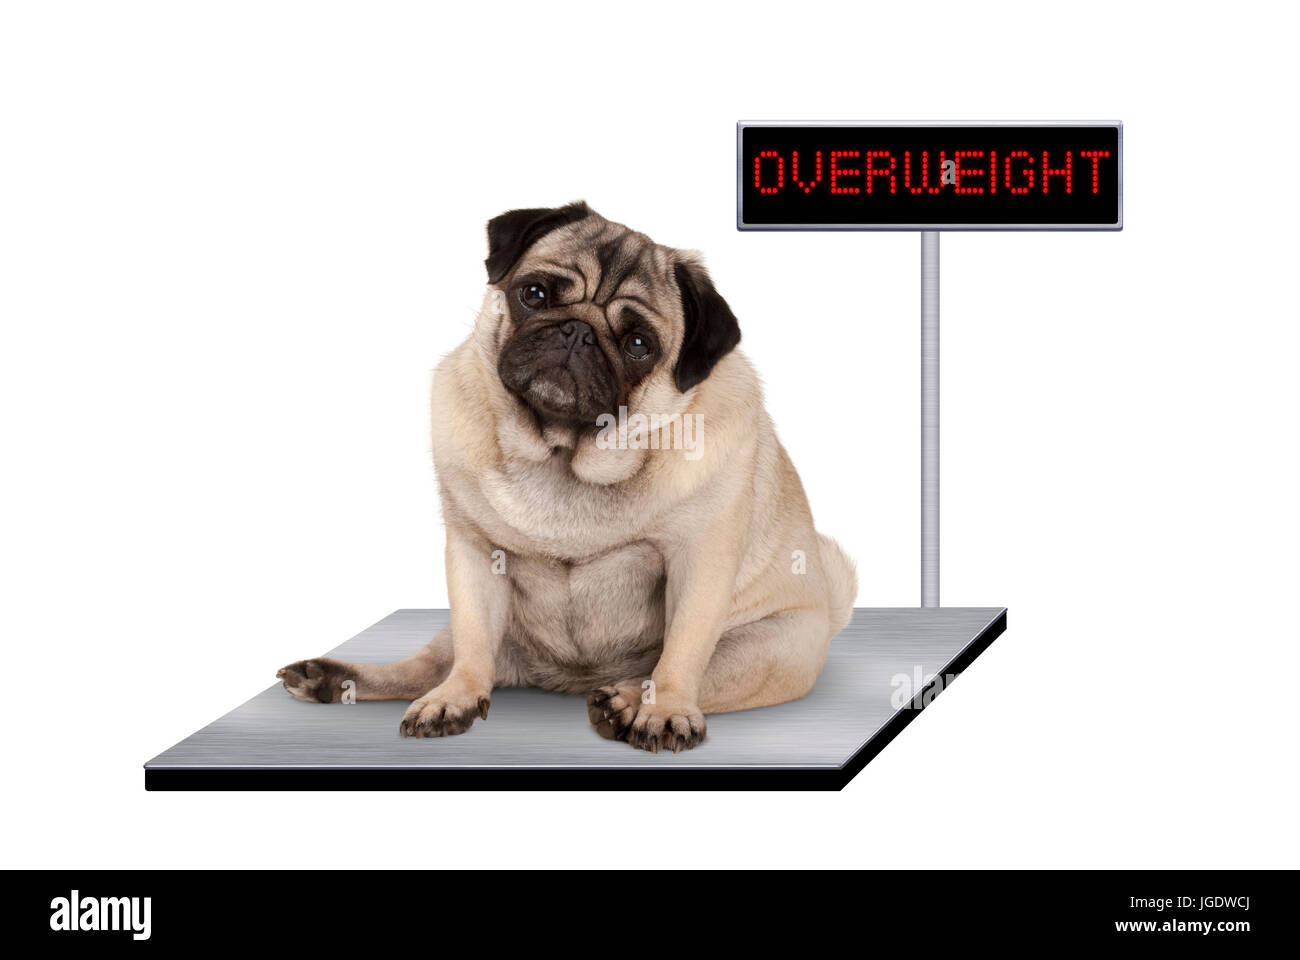 https://c8.alamy.com/comp/JGDWCJ/heavy-fat-pug-puppy-dog-sitting-down-on-vet-scale-with-overweight-JGDWCJ.jpg